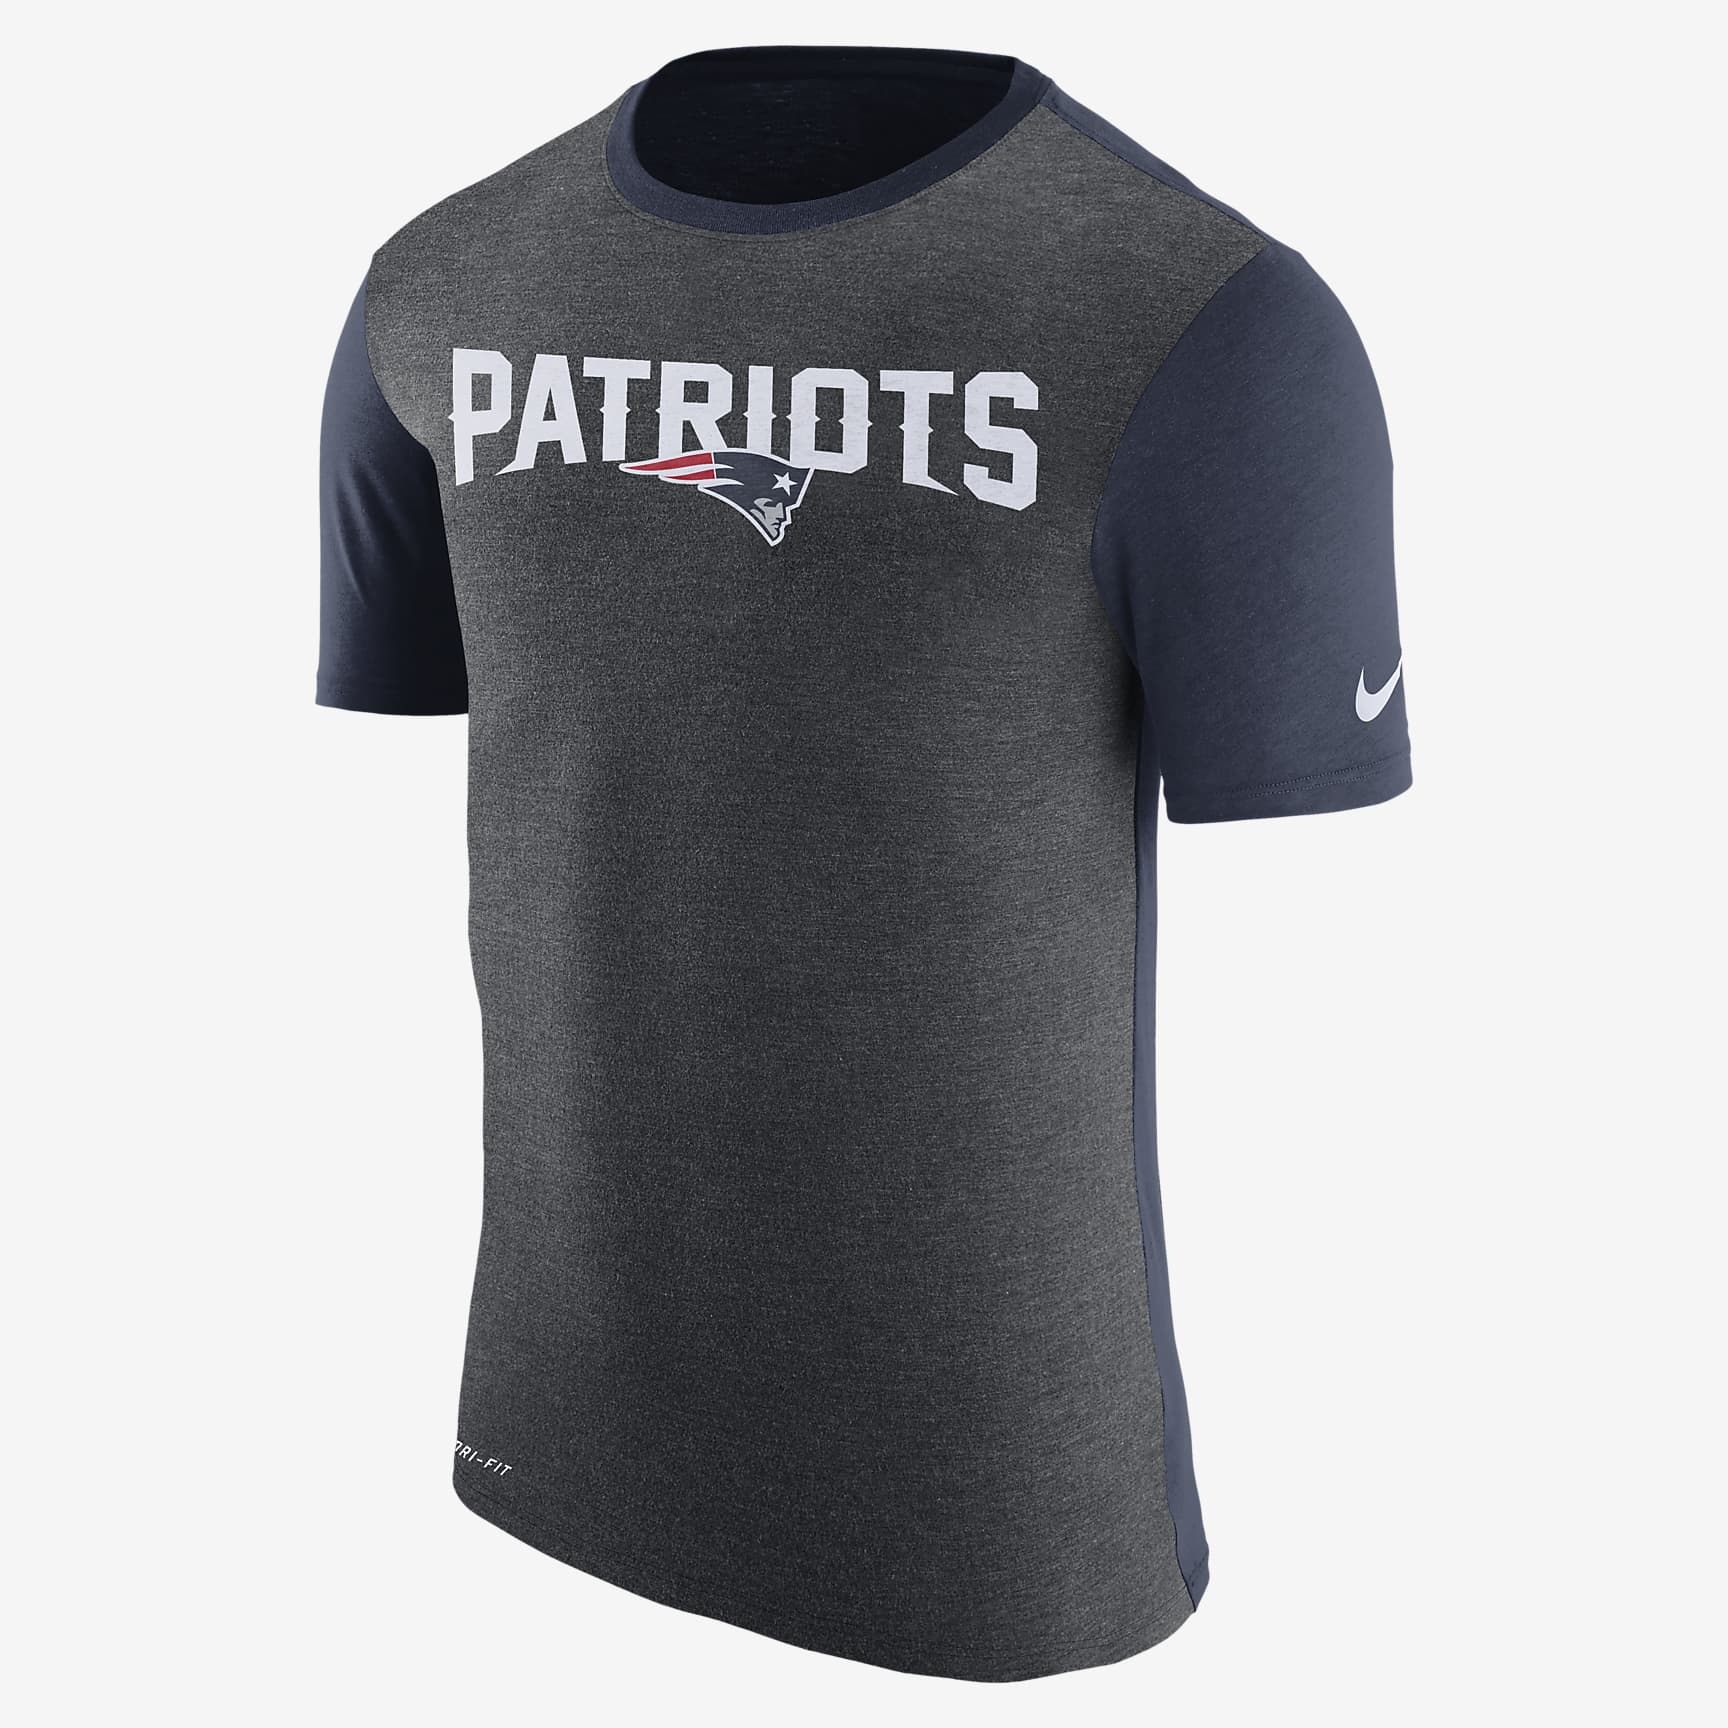 Nike Dry Color Dip (NFL Patriots) Men's T-Shirt. Nike BG